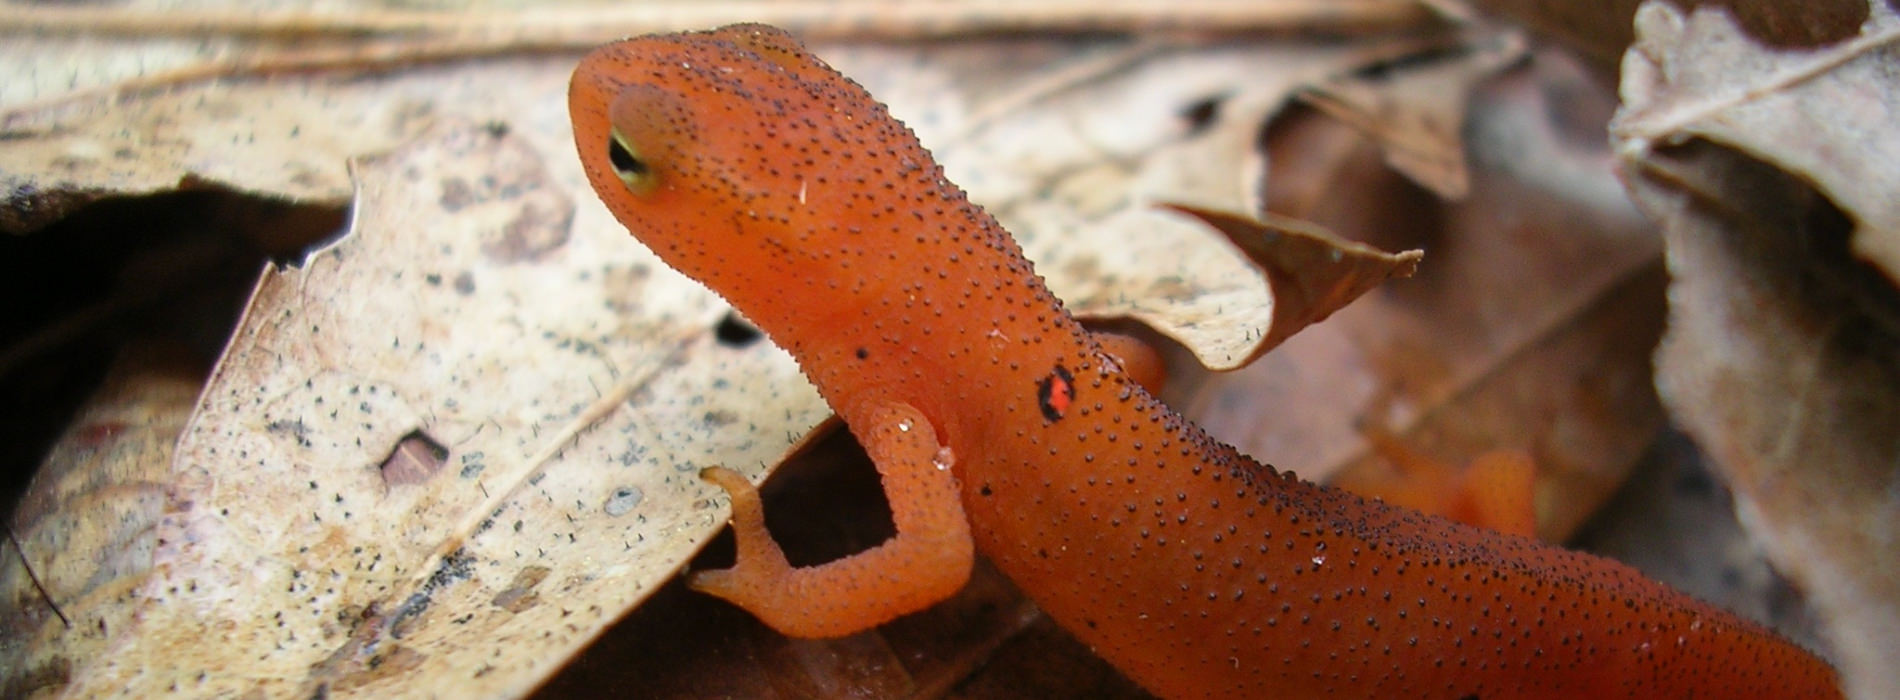 A salamander swims among leaves